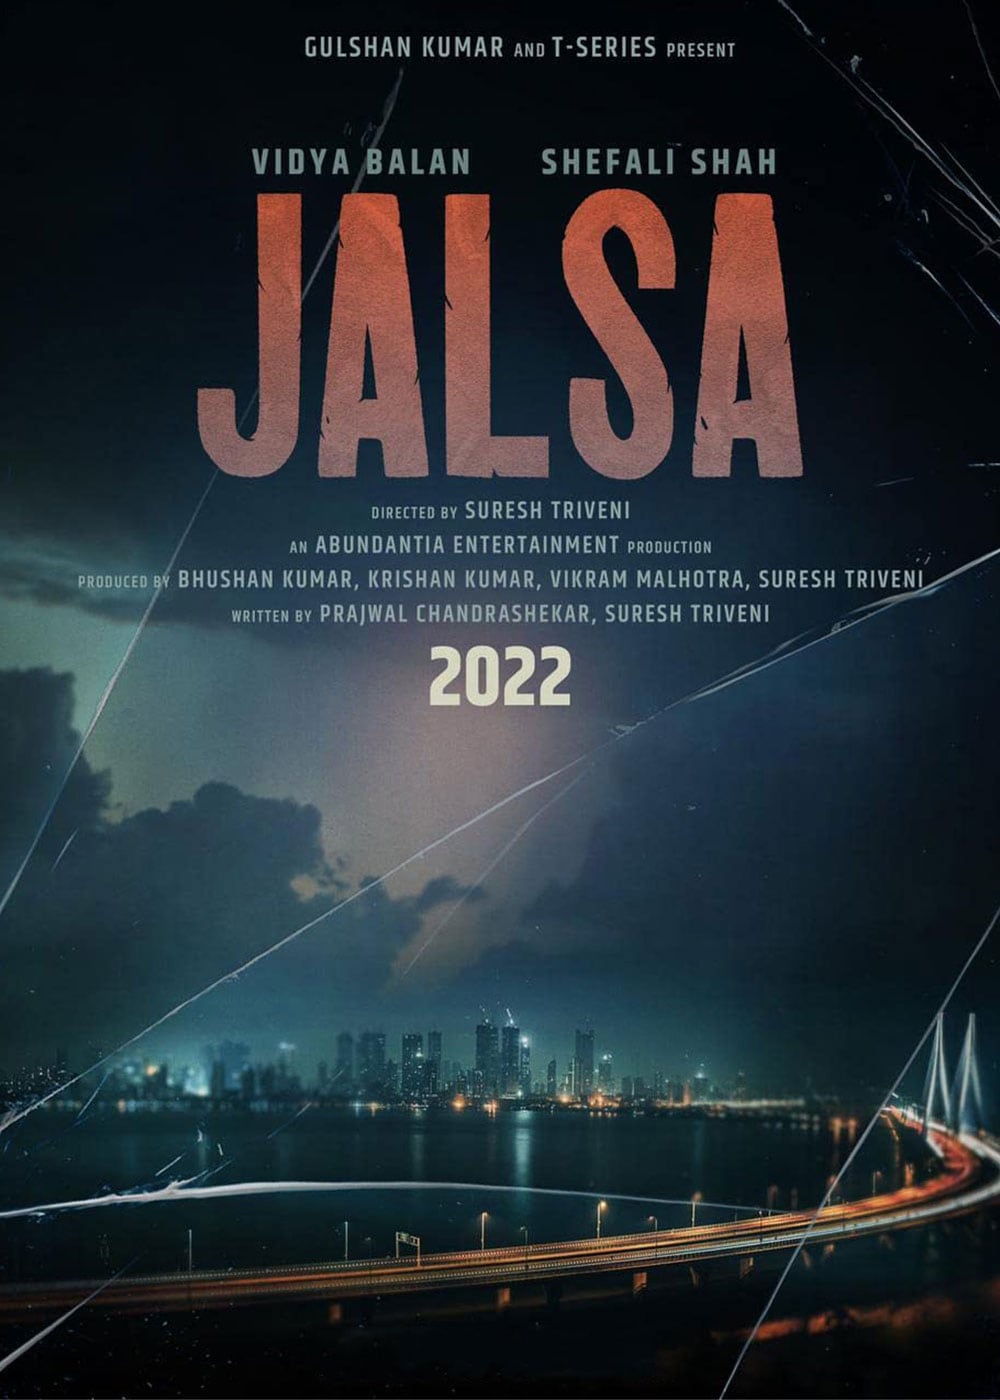 jalsa movie reviews